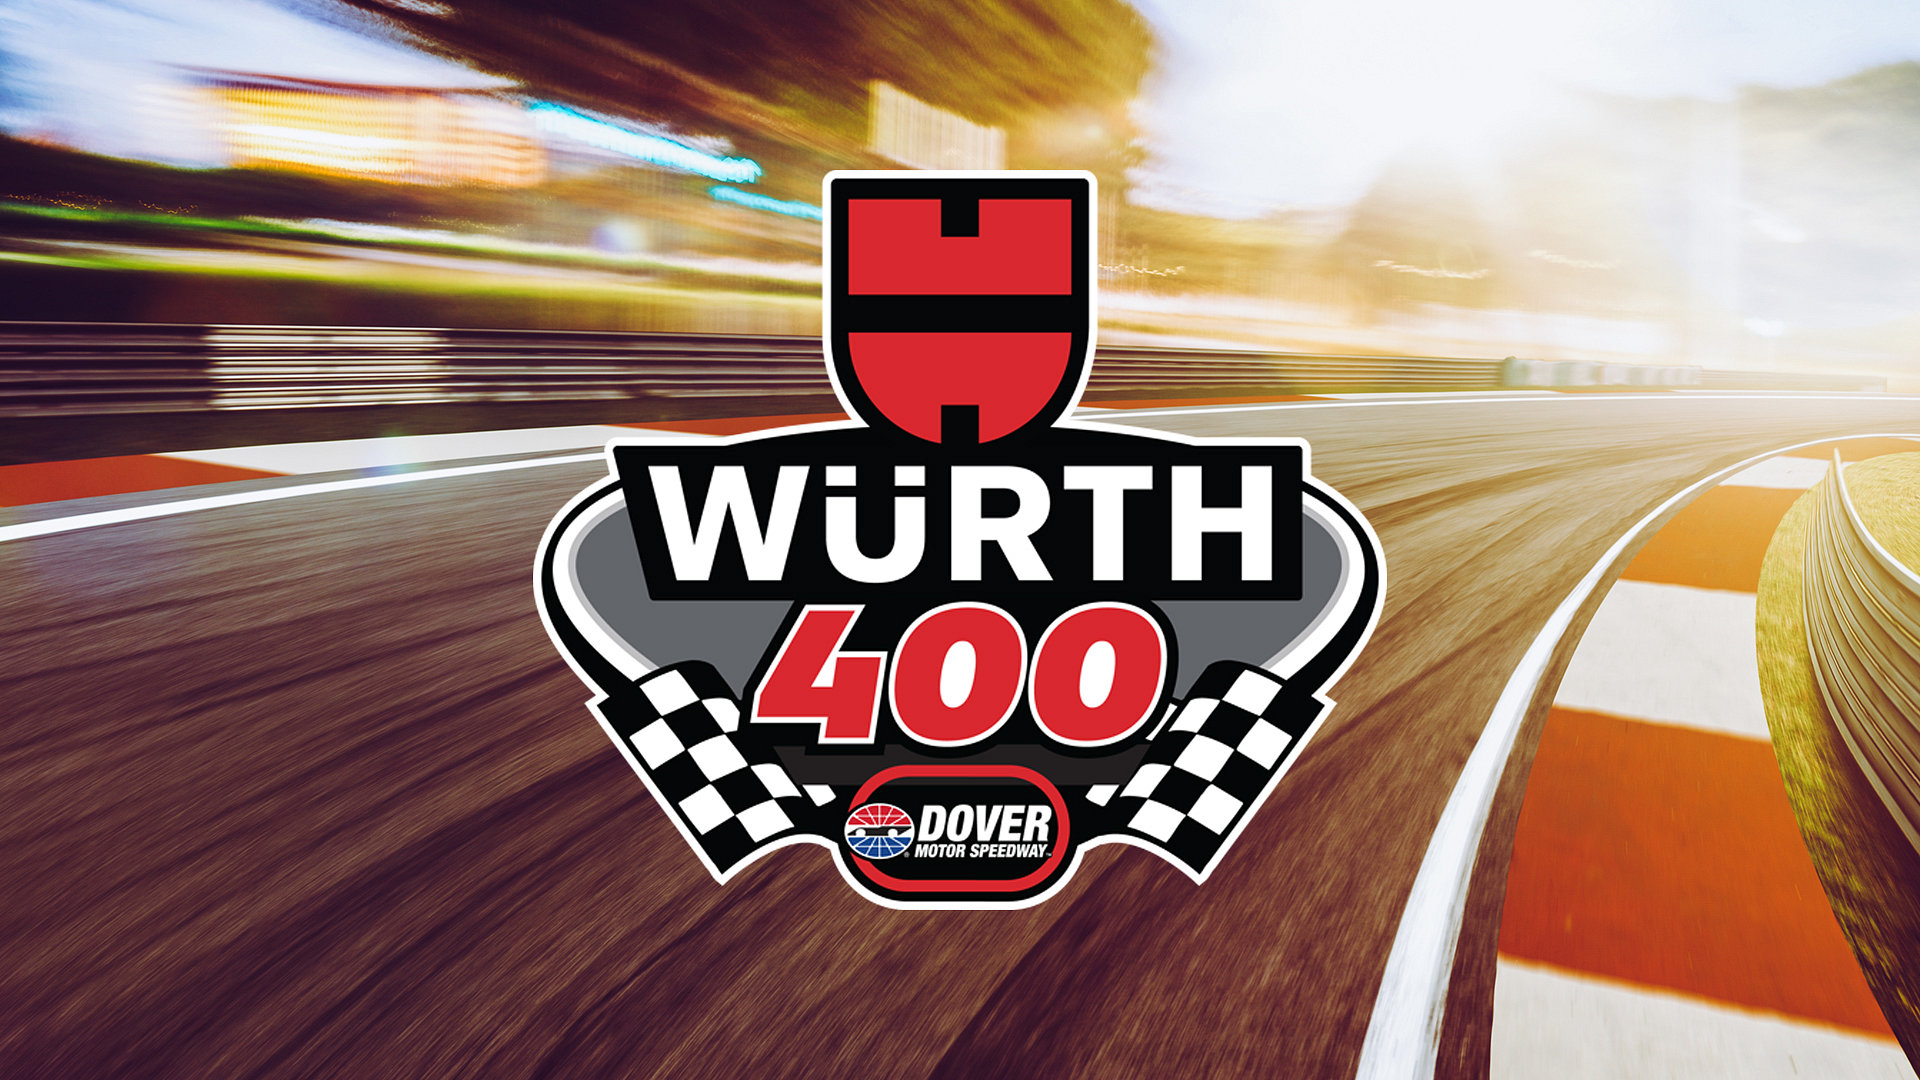 NASCAR Cup Series: Wurth 400